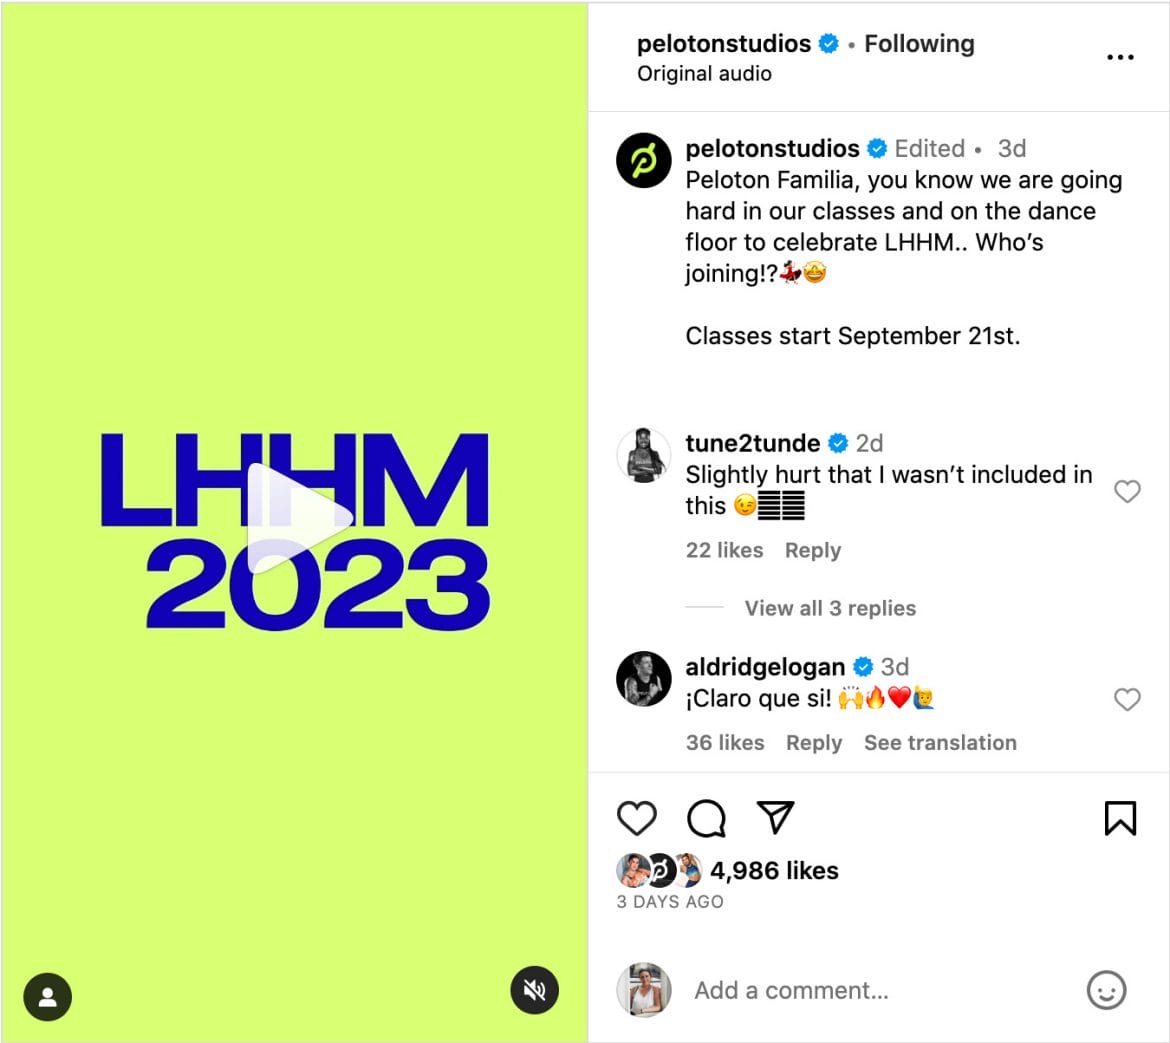 @PelotonStudios Instagram post announcing 2023 Latin & Hispanic Heritage Month programming.